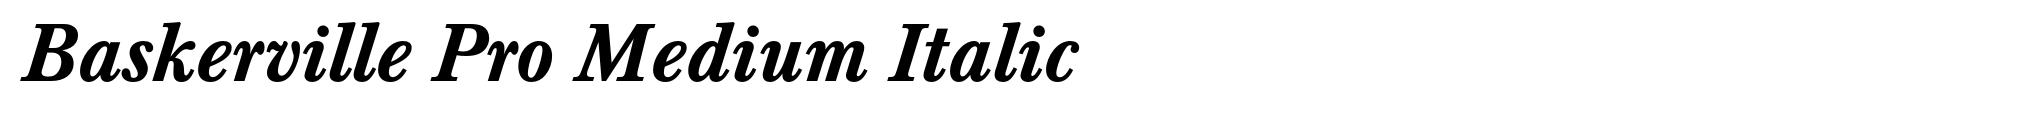 Baskerville Pro Medium Italic image